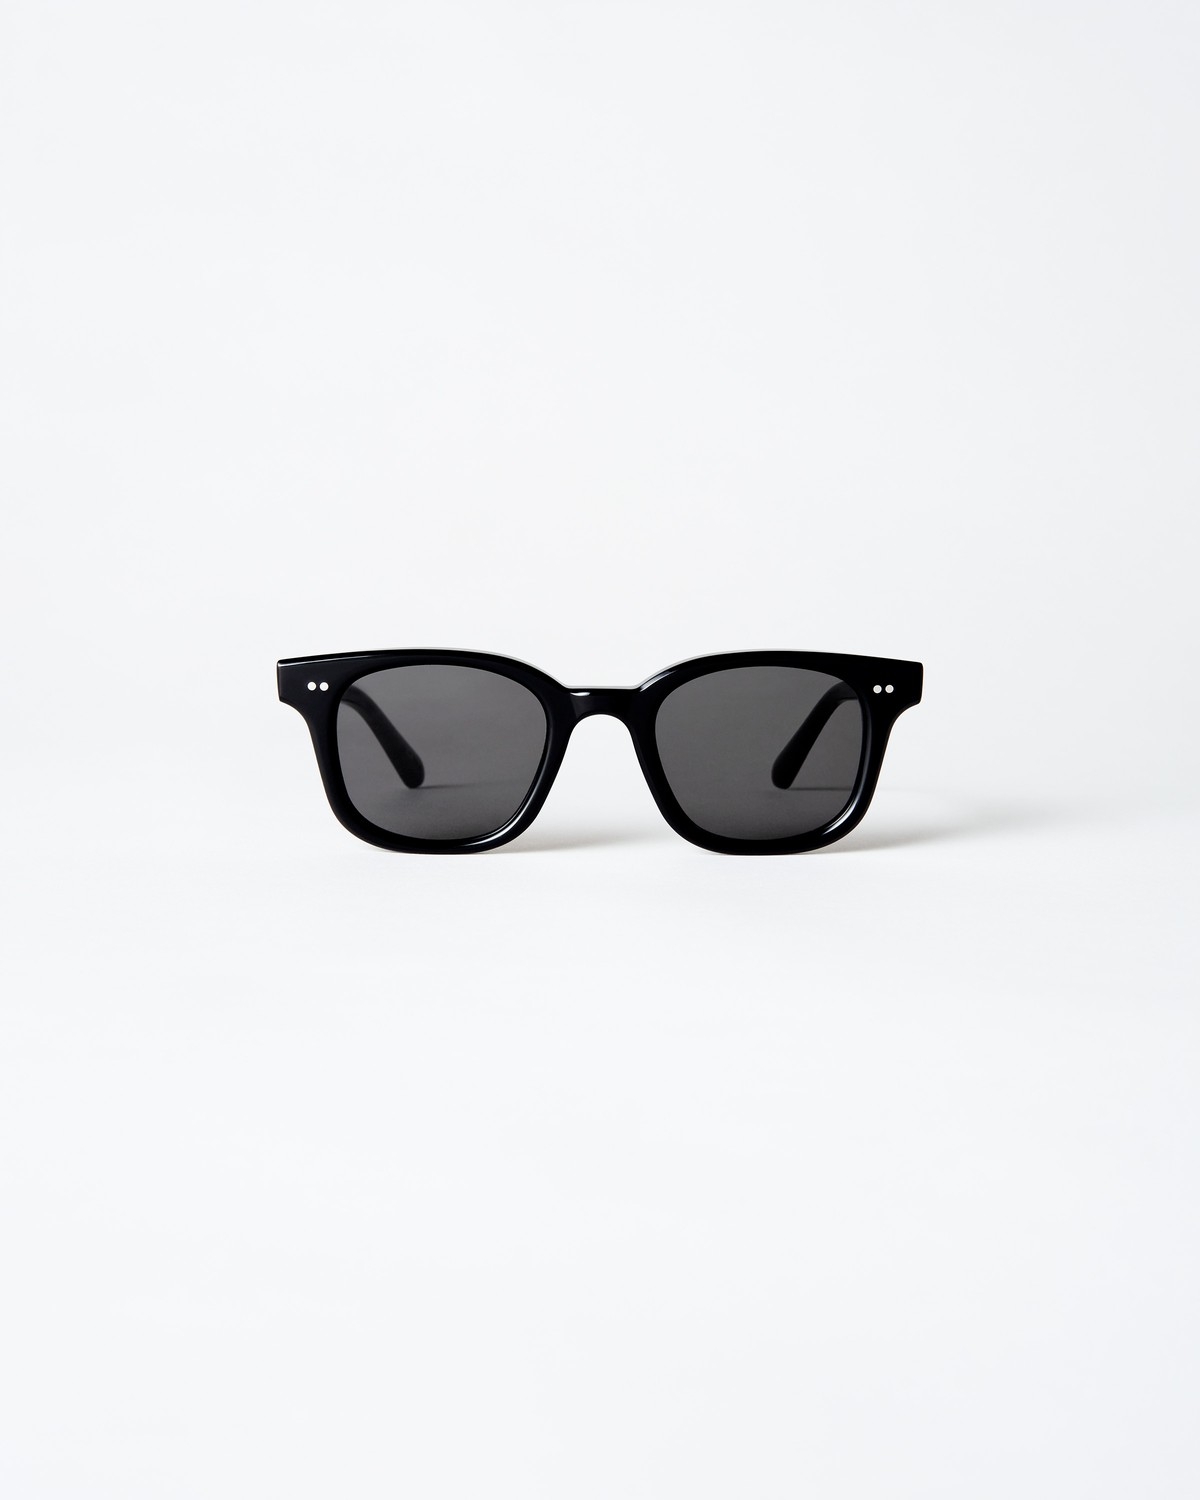 Sunglasses CHIMI – 04 Black